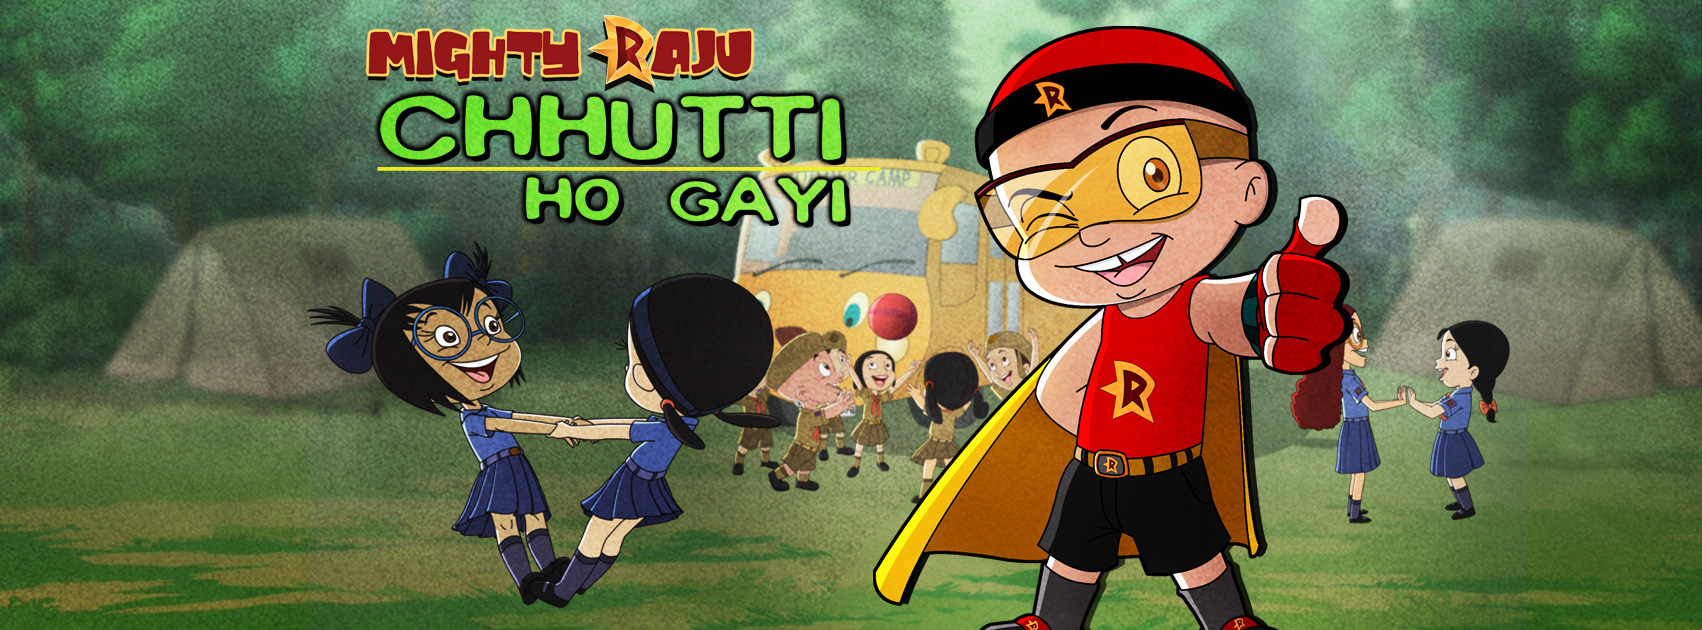 Watch Mighty Raju - Chutti Ho Gayi full Movie | Animated Movies